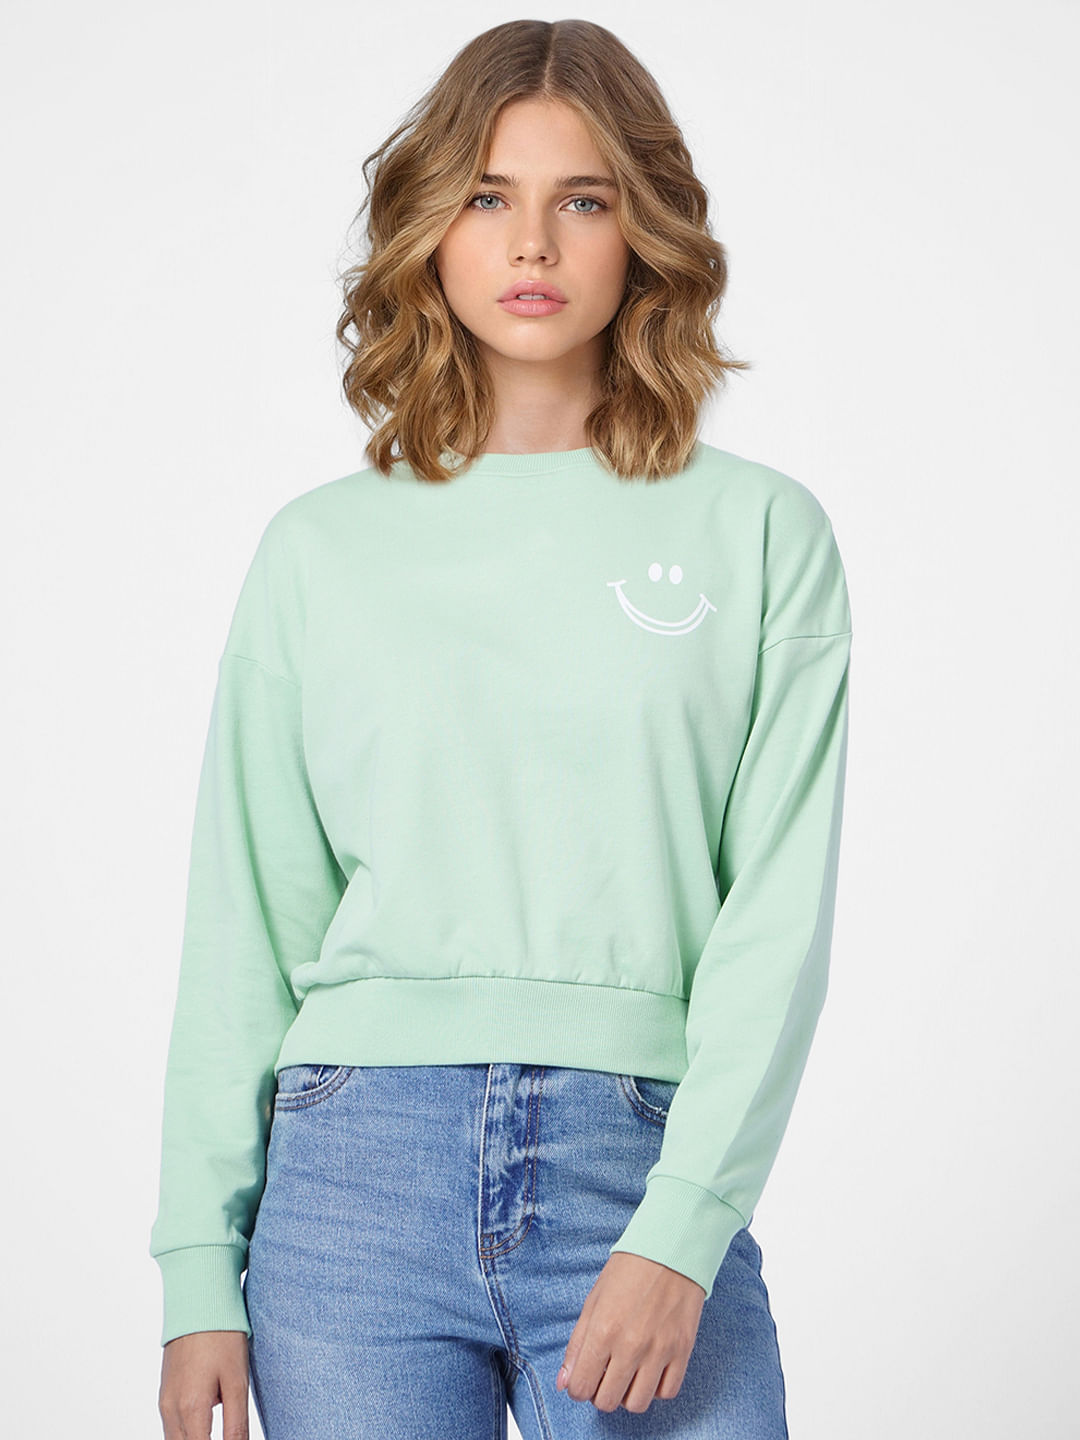 WOMEN FASHION Jumpers & Sweatshirts Fur Gray S Zara jumper discount 50% 